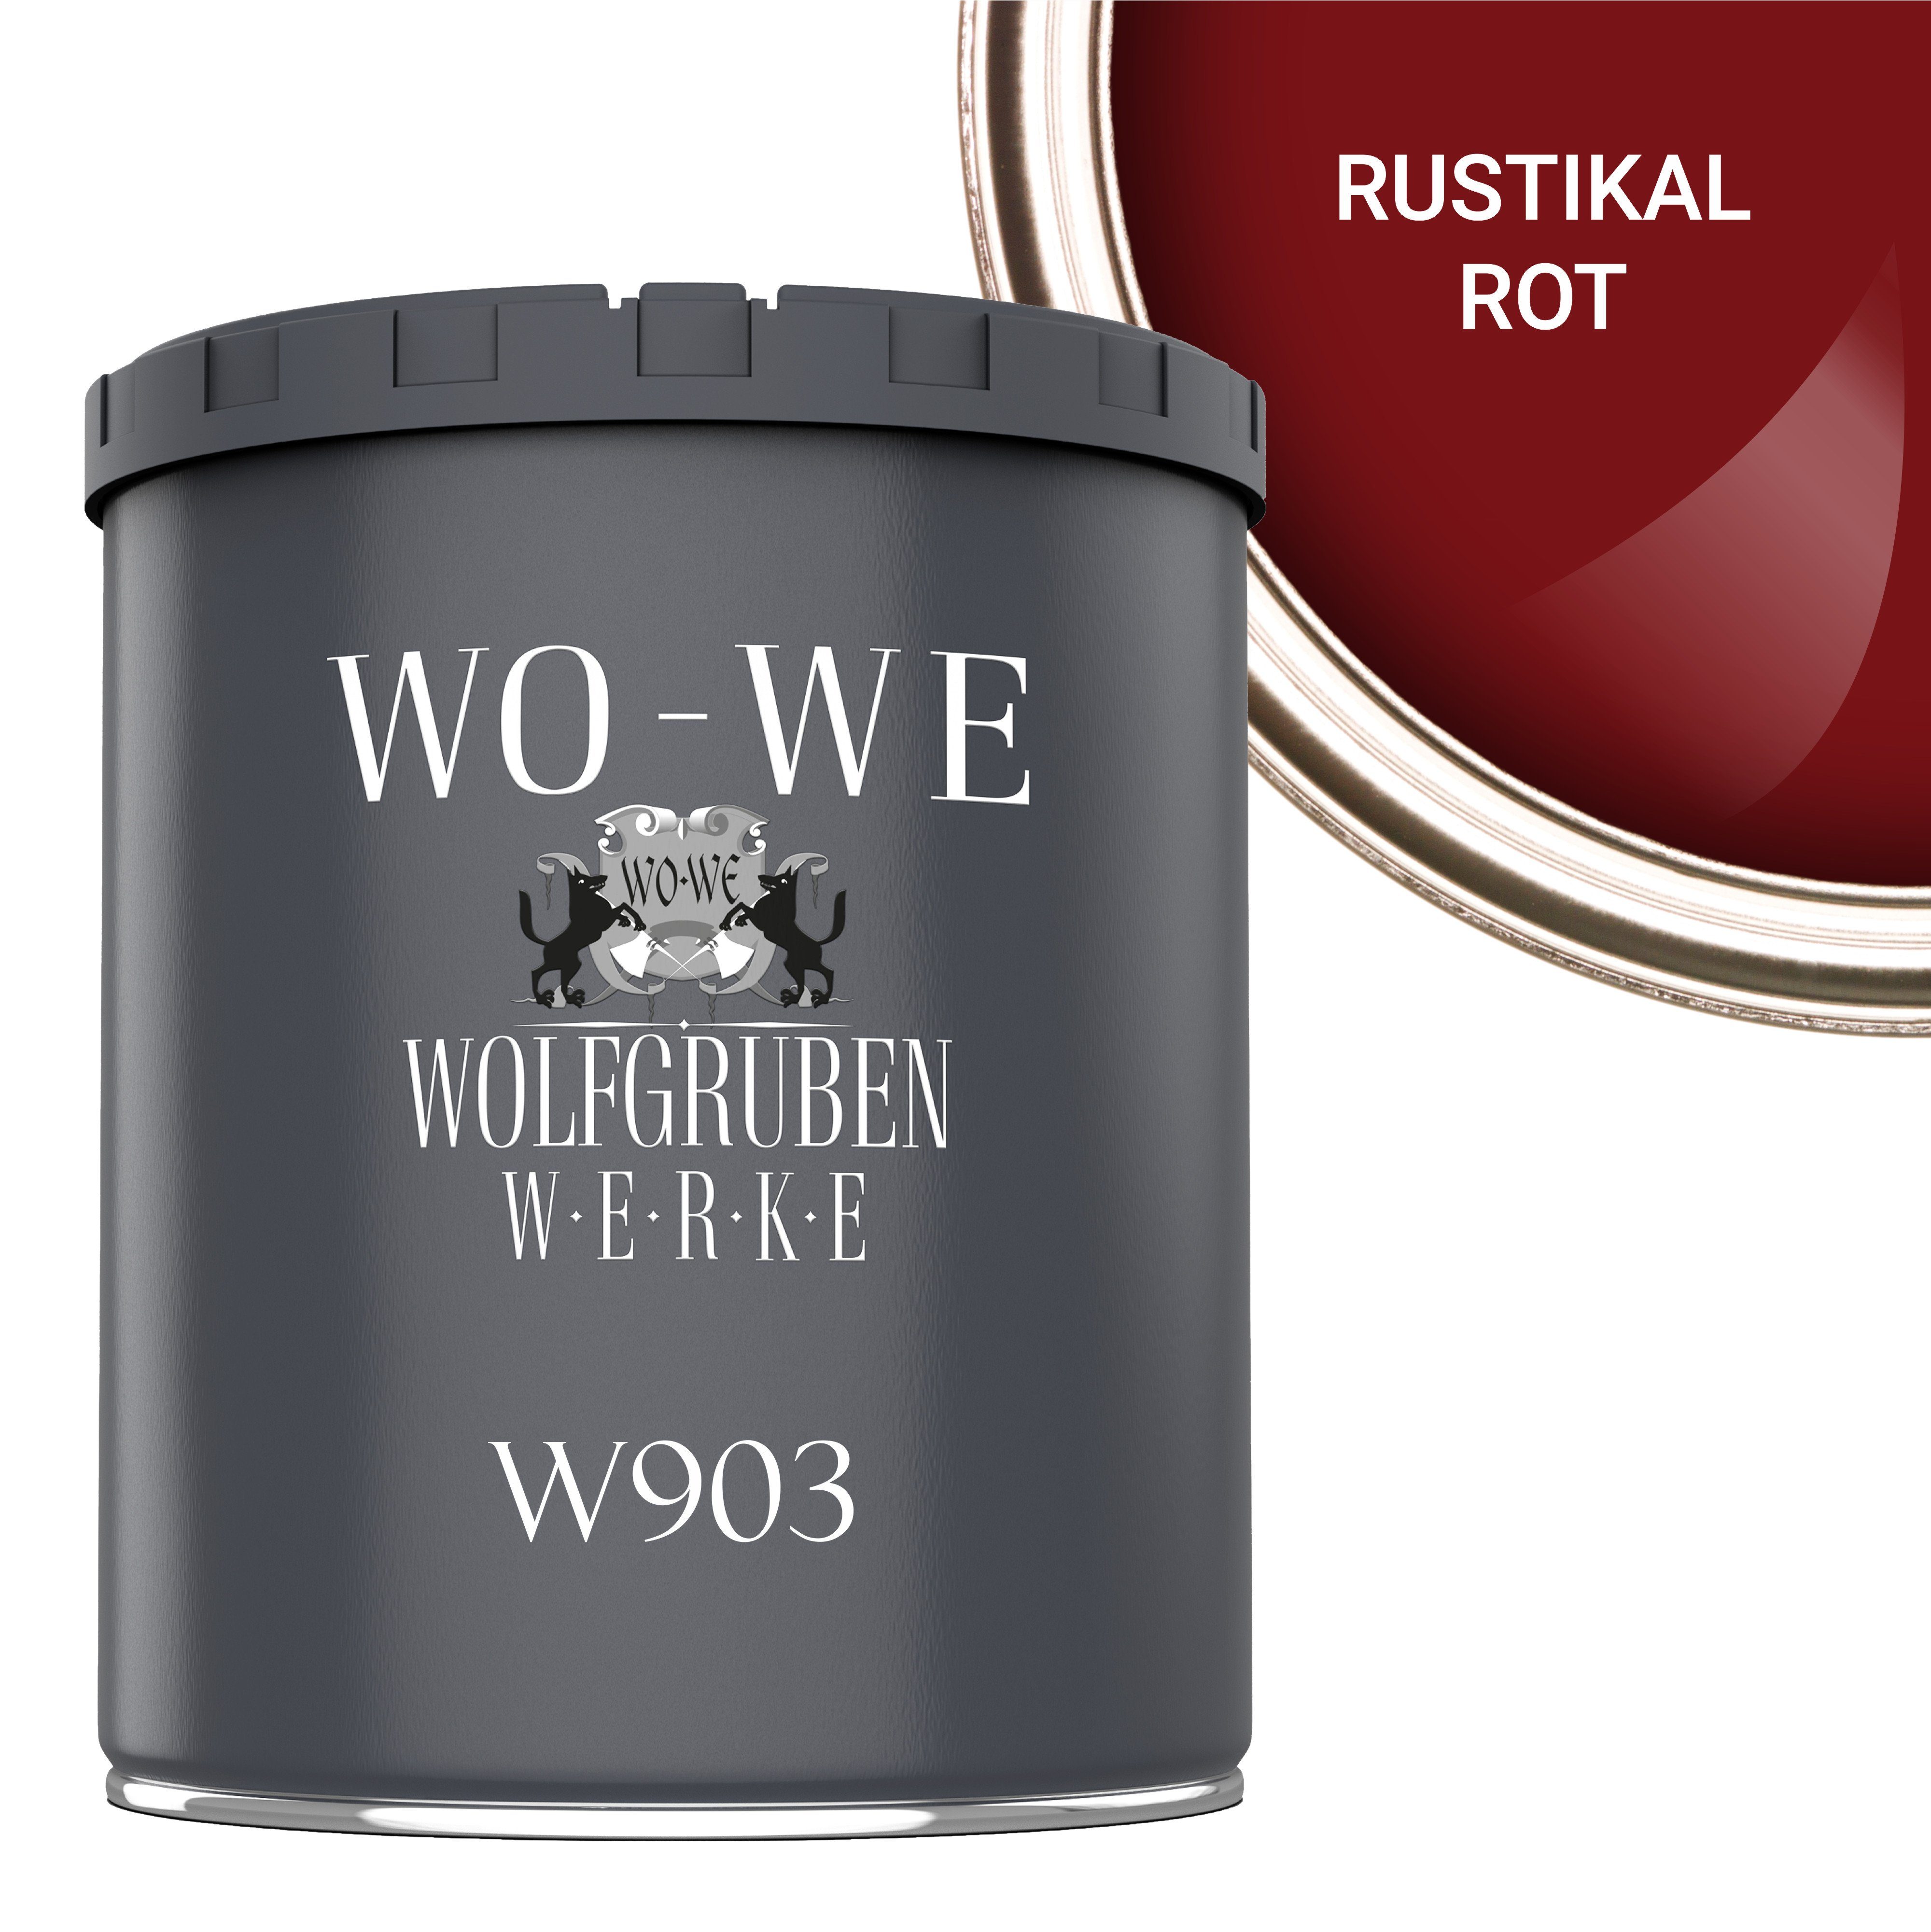 WO-WE W903, 1-10L, Heizkörperlack Heizkörperfarbe Wasserbasis Rustikal Rot Heizungsfarbe